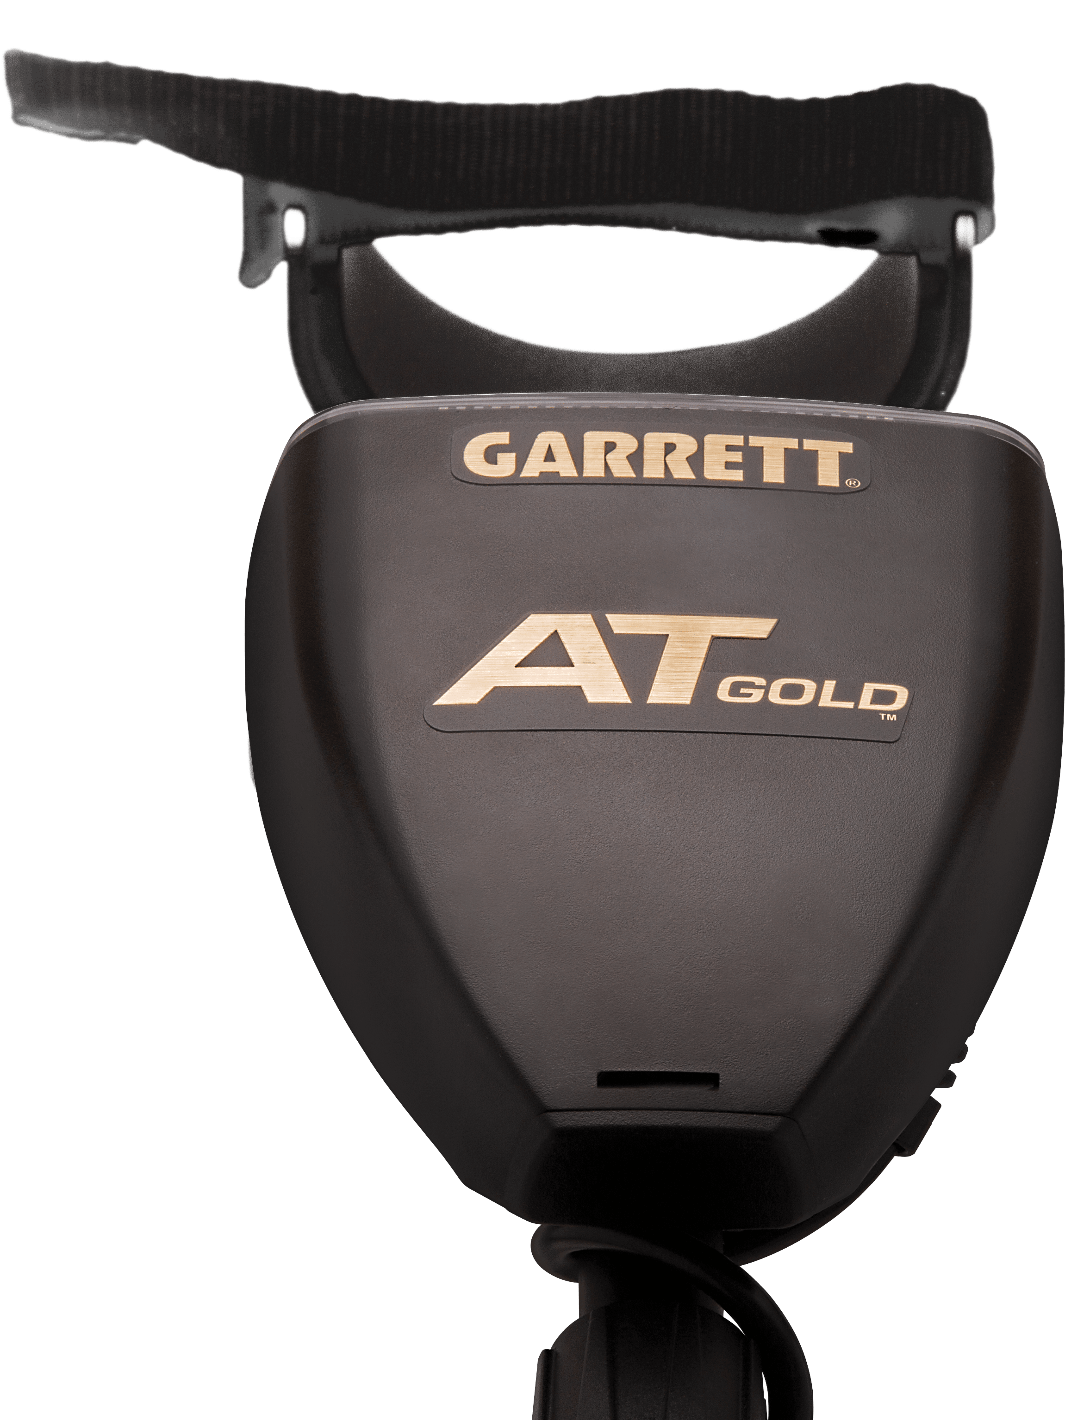 Garrett AT Gold Metal Detector - Treasure Coast Metal Detectors